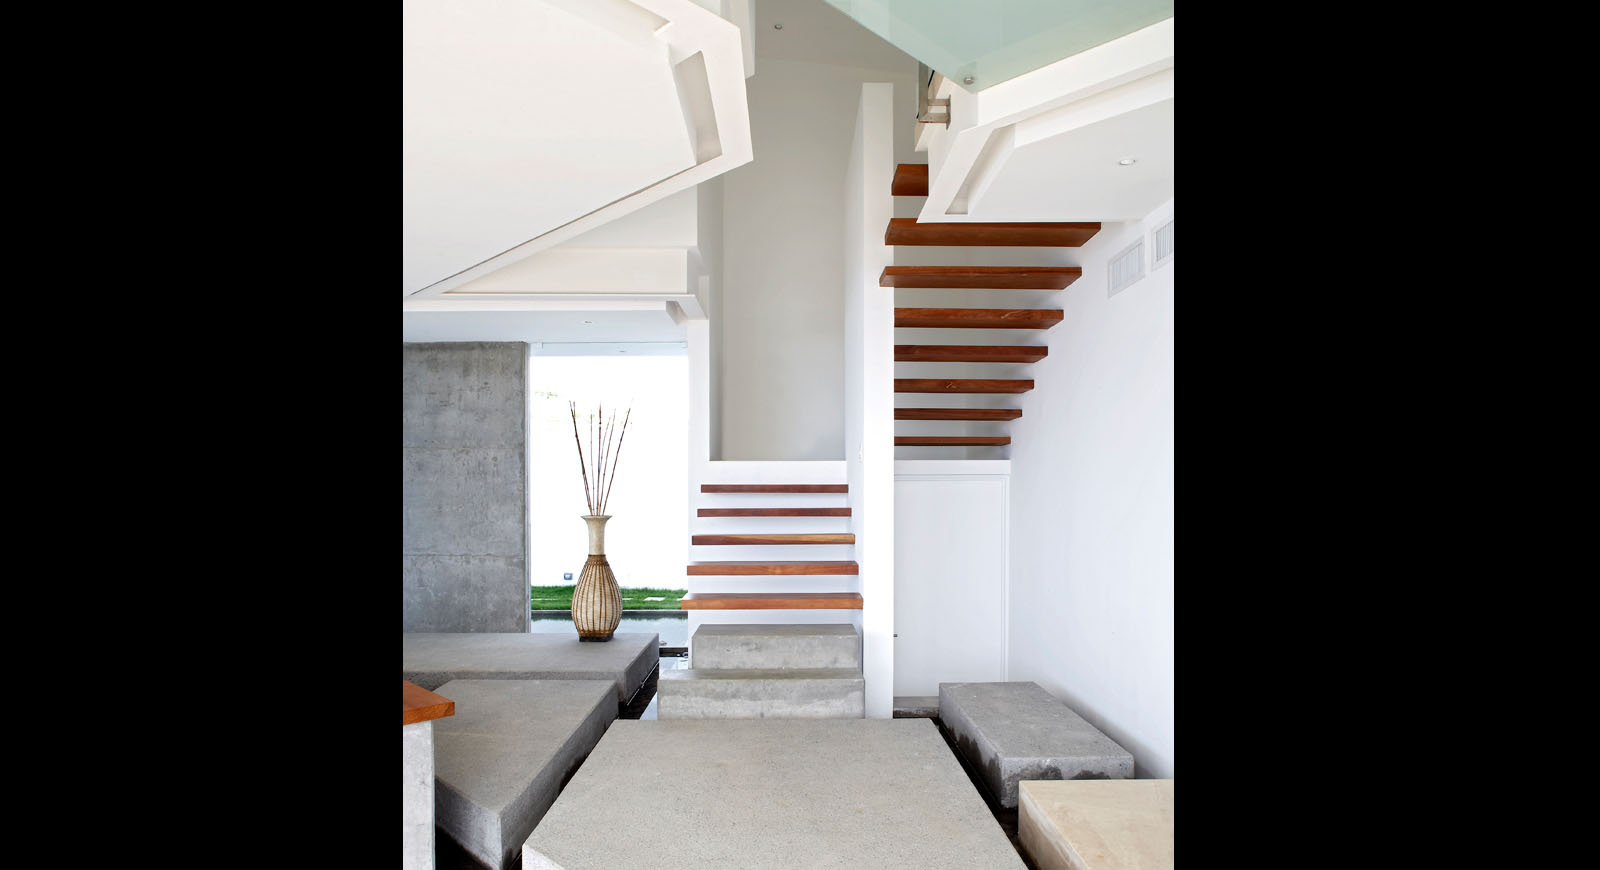 Stair-Escaleras (4)